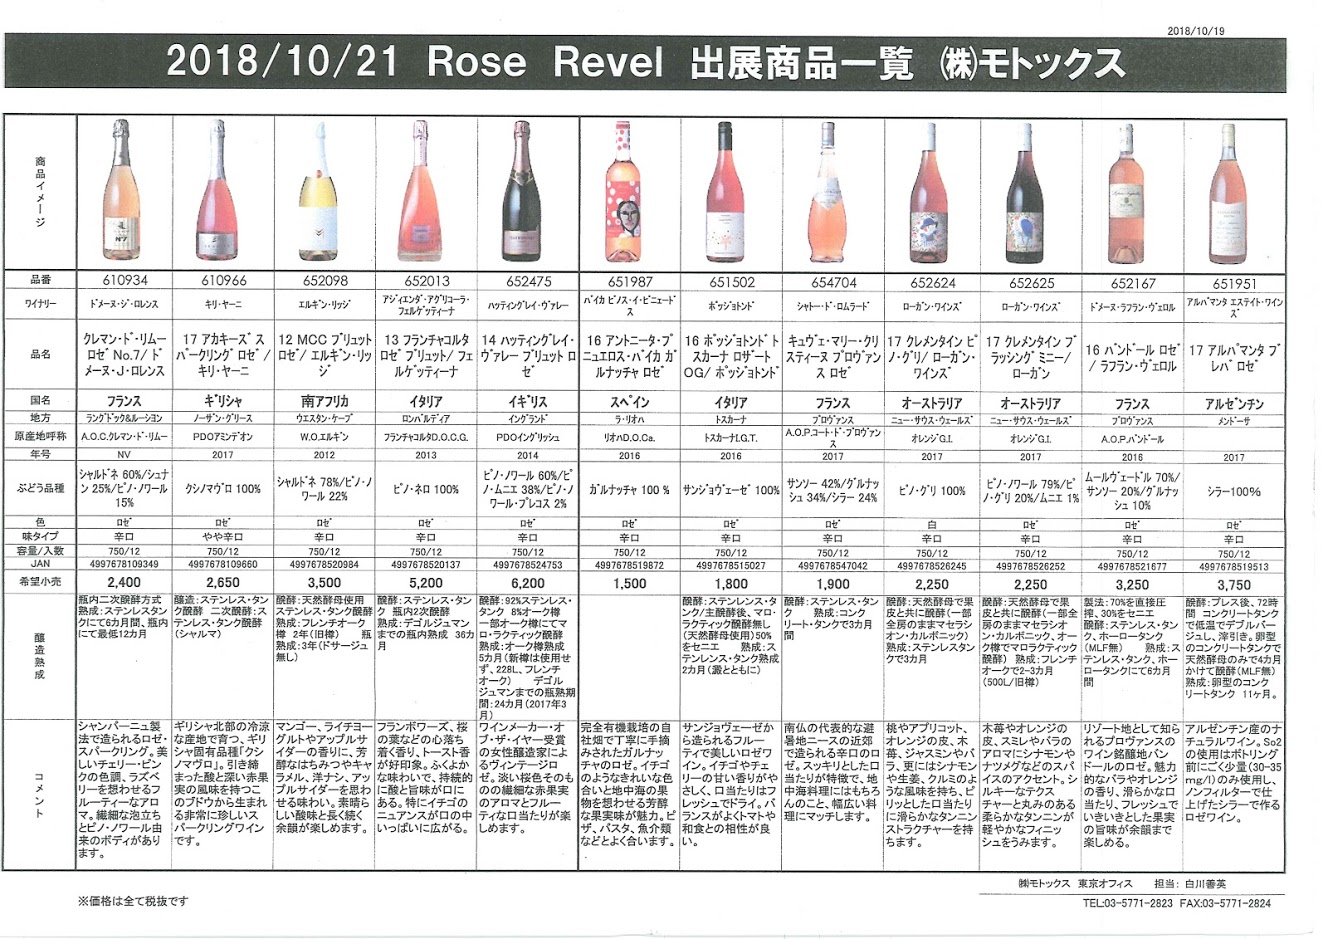 ROSE REVEL　2018年10月21日(日)